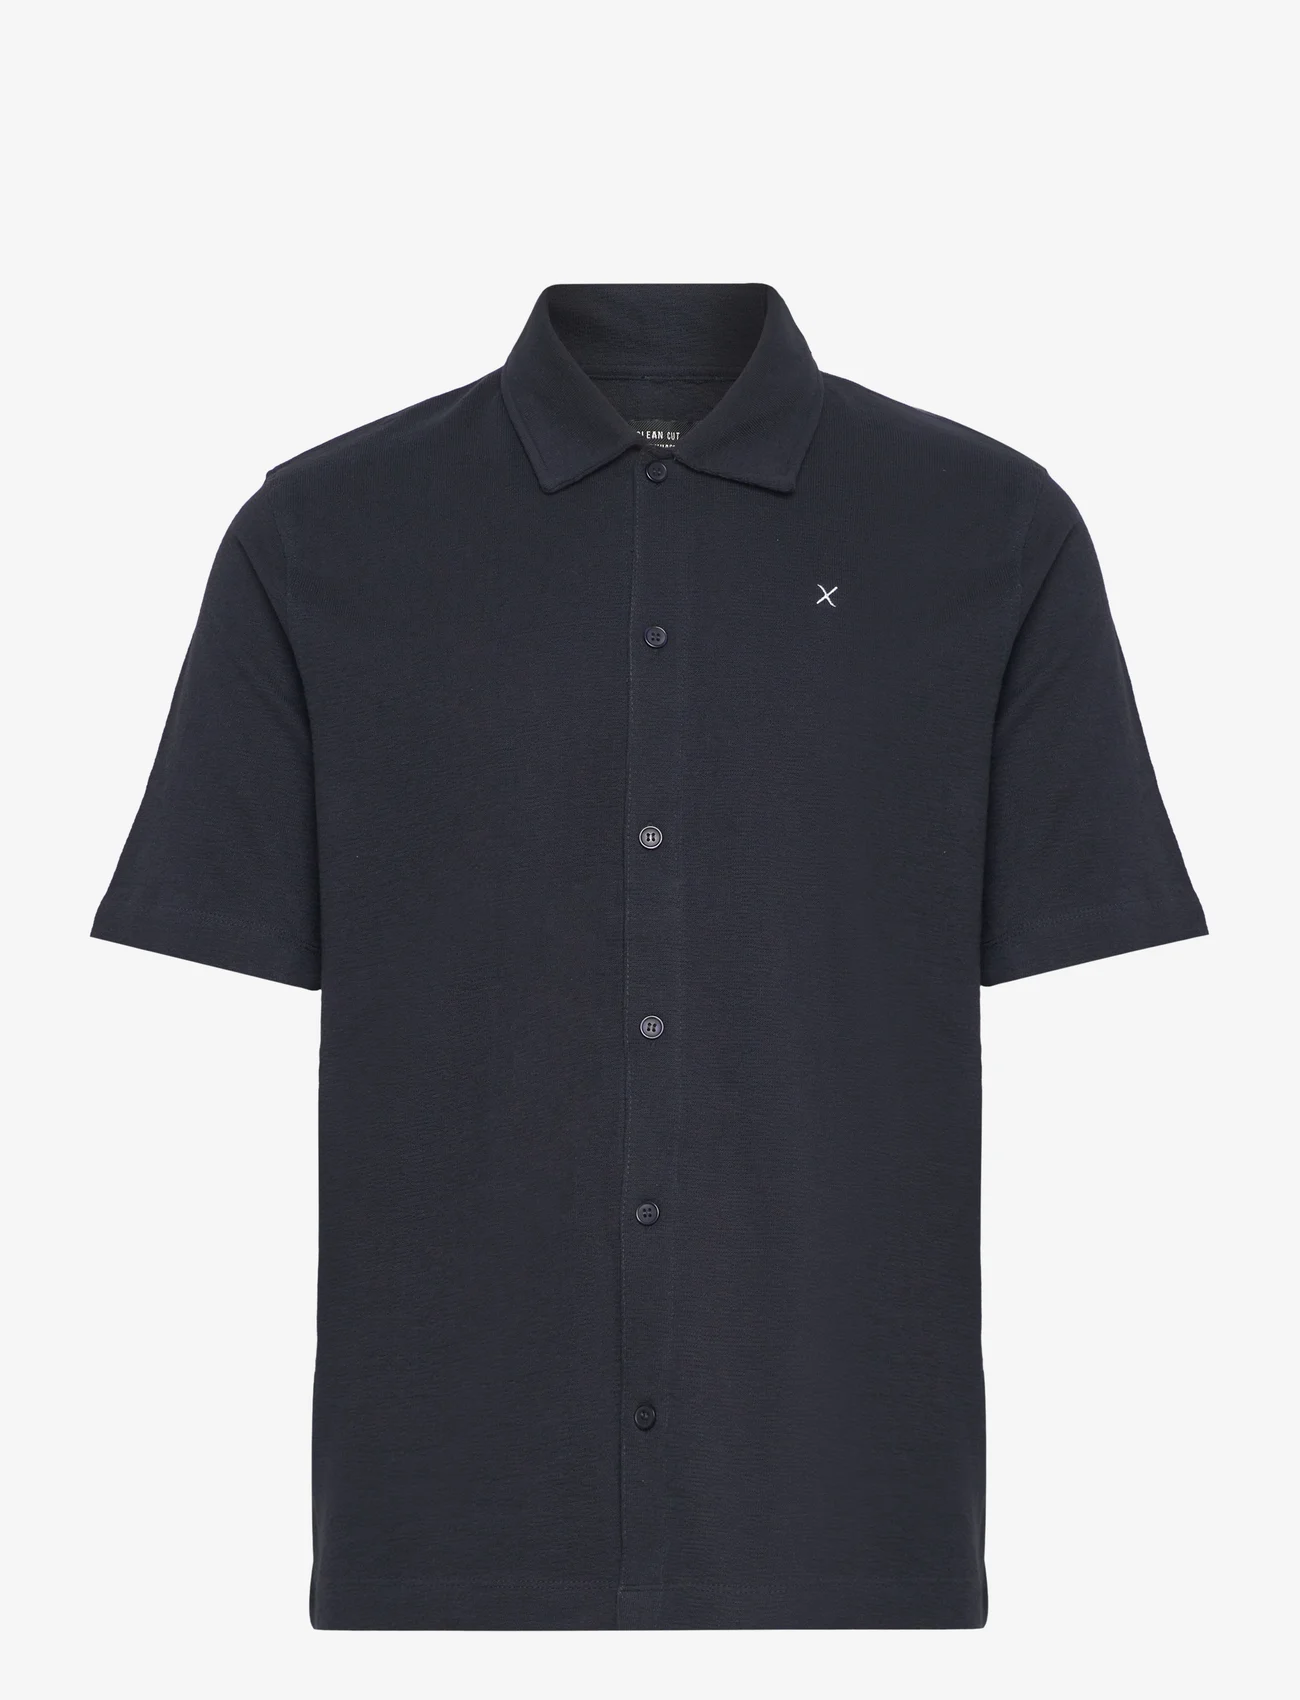 Clean Cut Copenhagen - Calton Structured Shirt S/S - short-sleeved polos - dark navy - 0